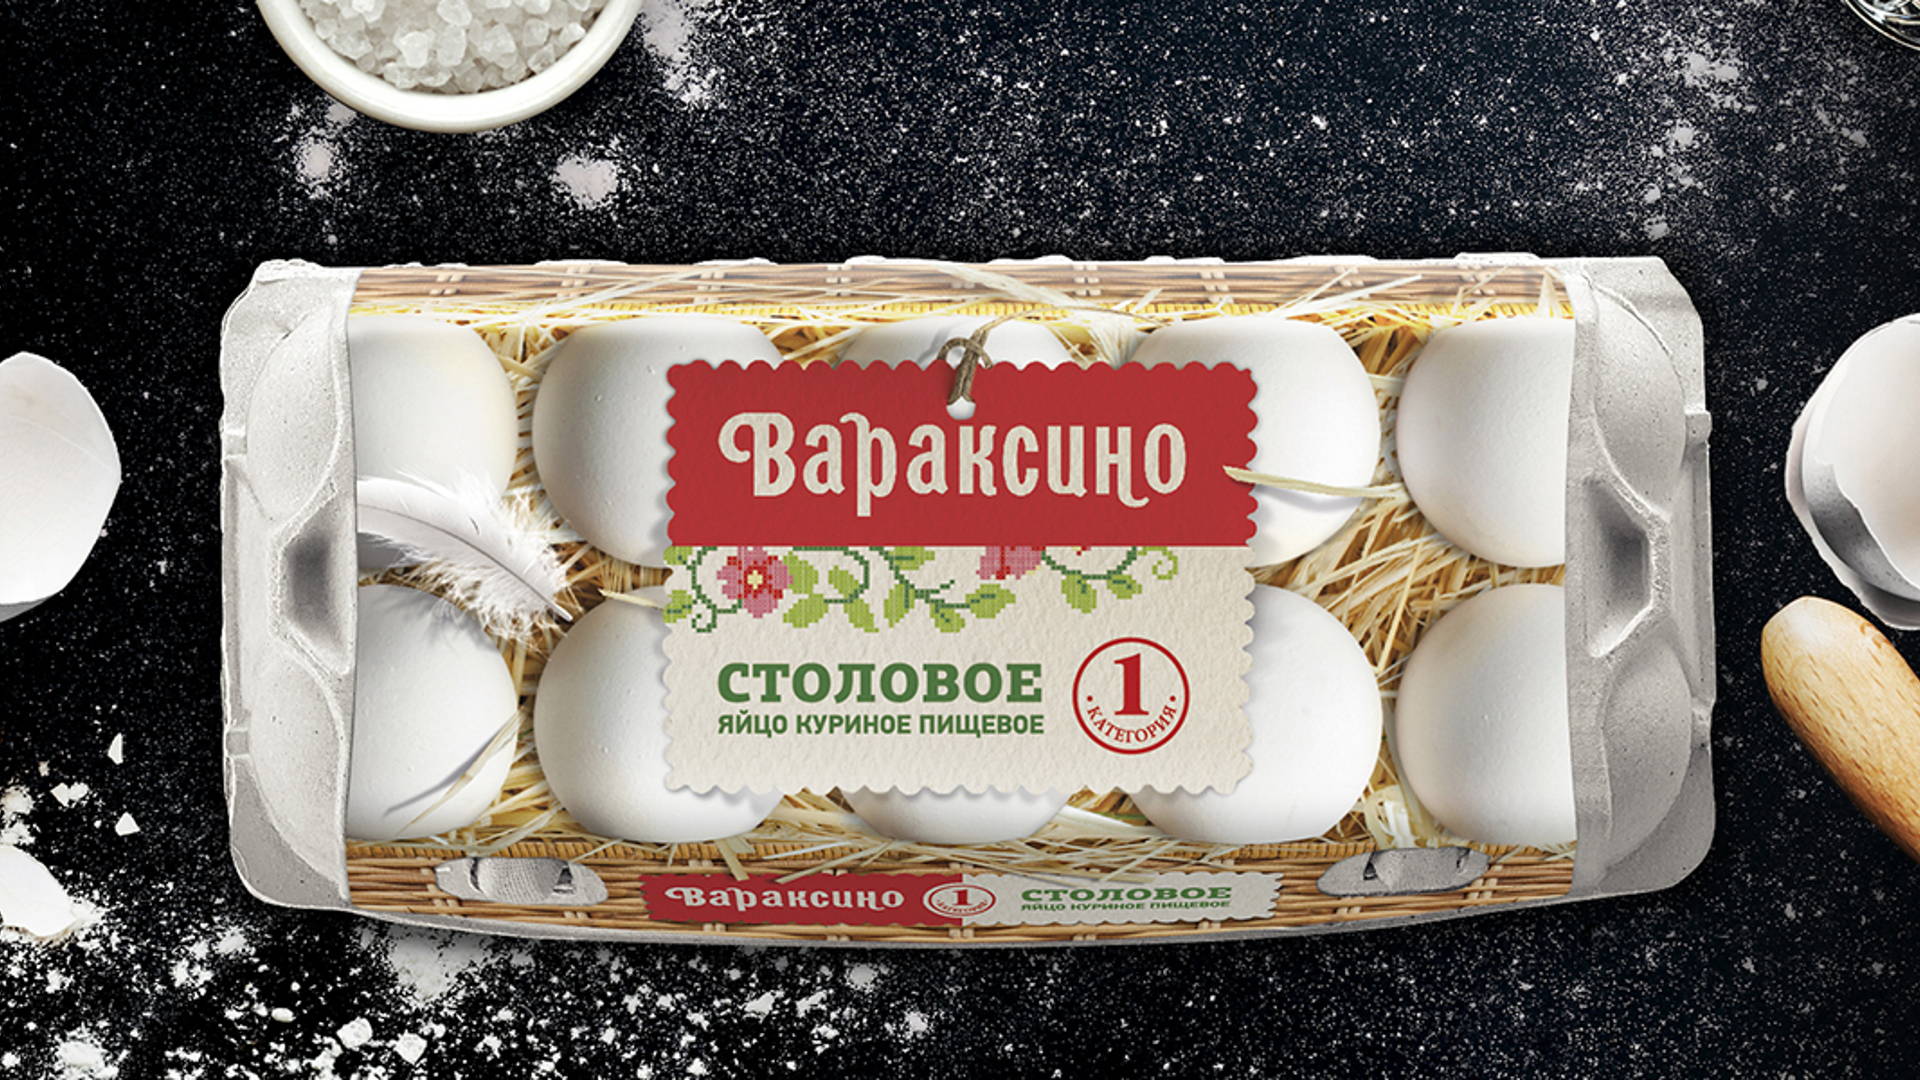 Featured image for  Varaksino Eggs